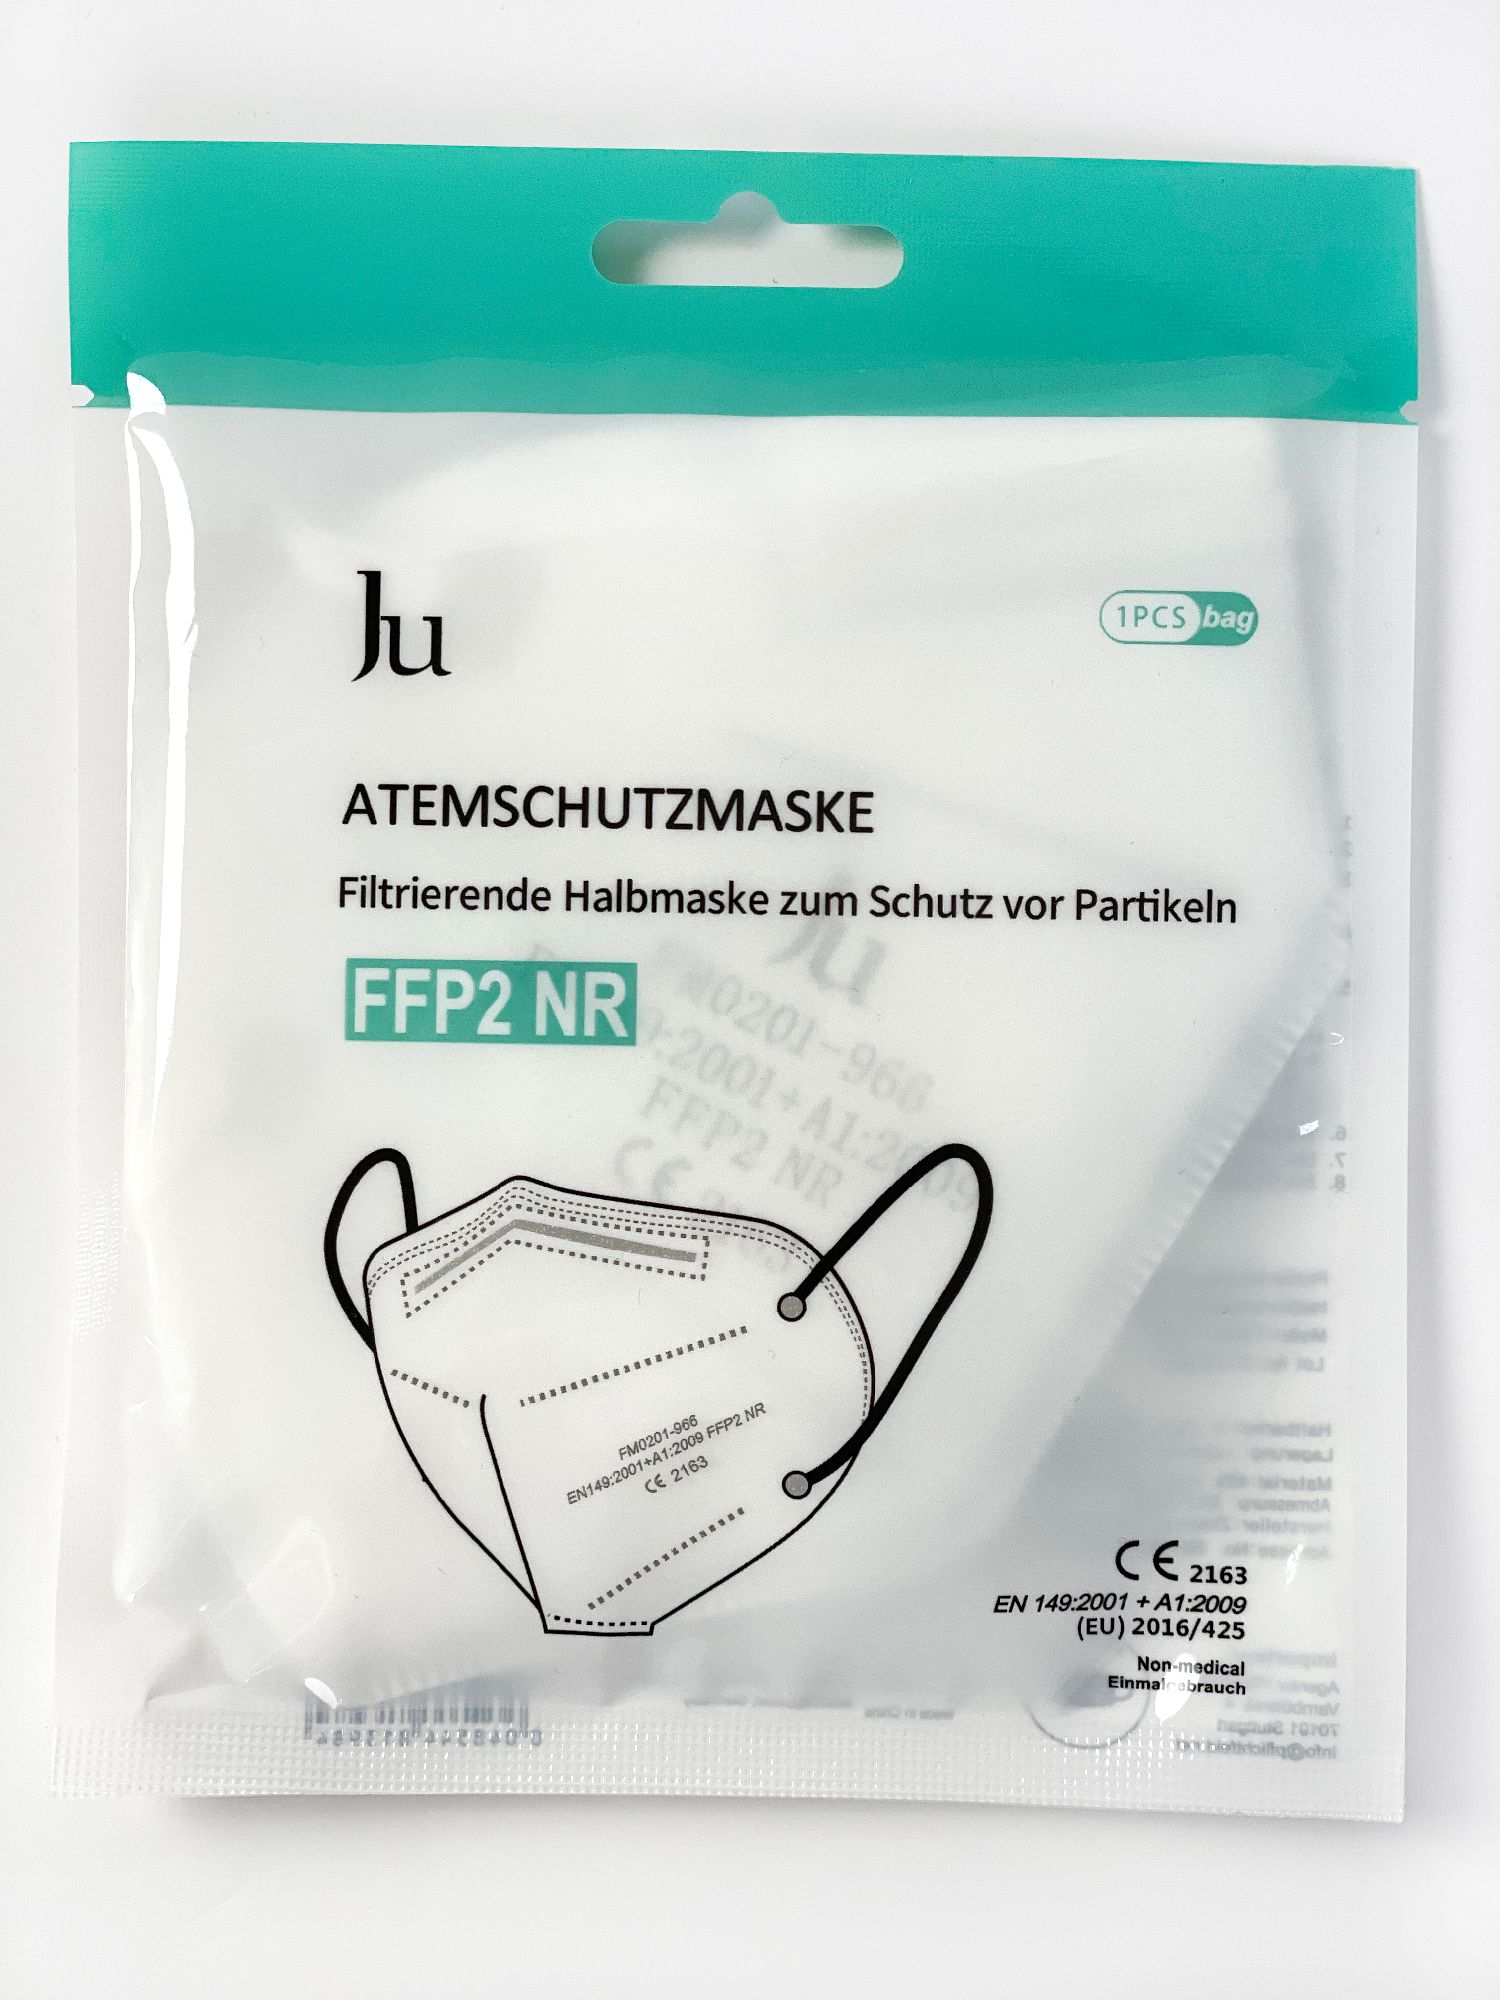 Atemschutzmaske FFP2 1 Stück in Plastik Tüte